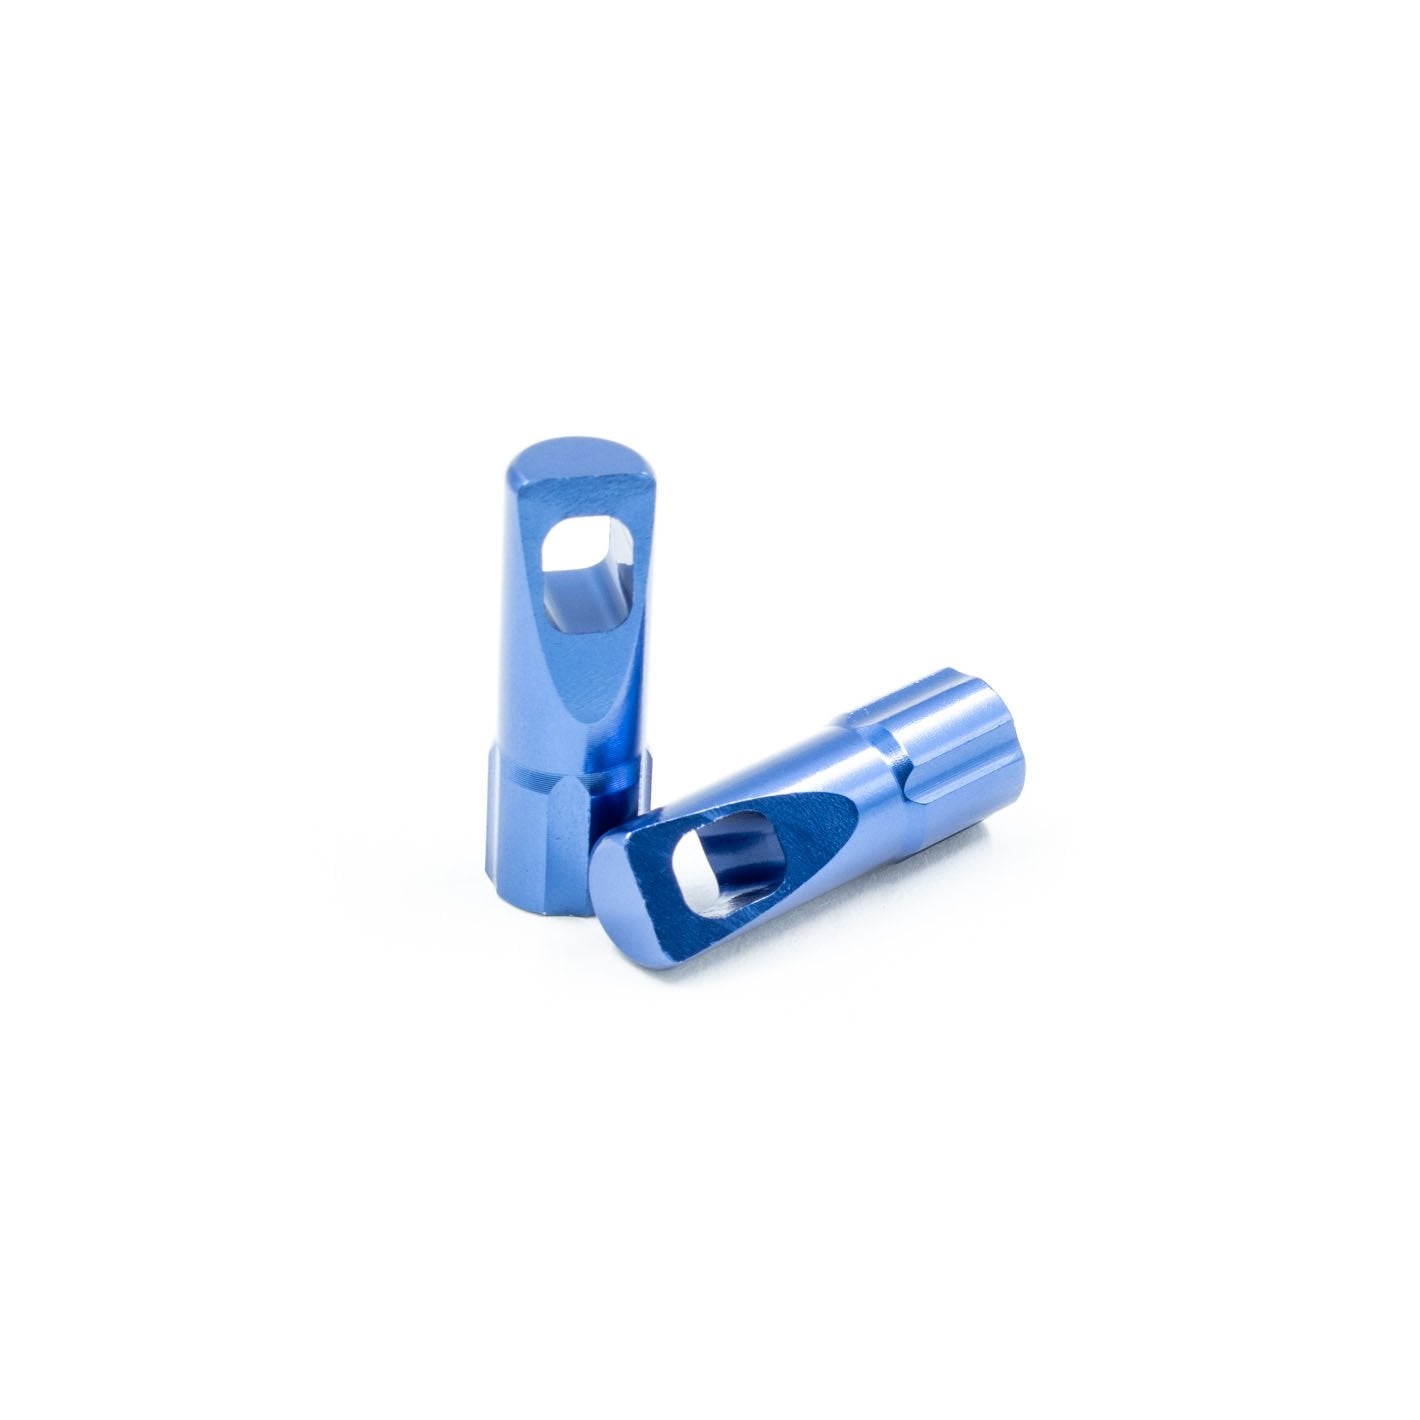 Blue, ultra-lightweight aluminium valve cap set for Presta valve types for road and mountain bikes